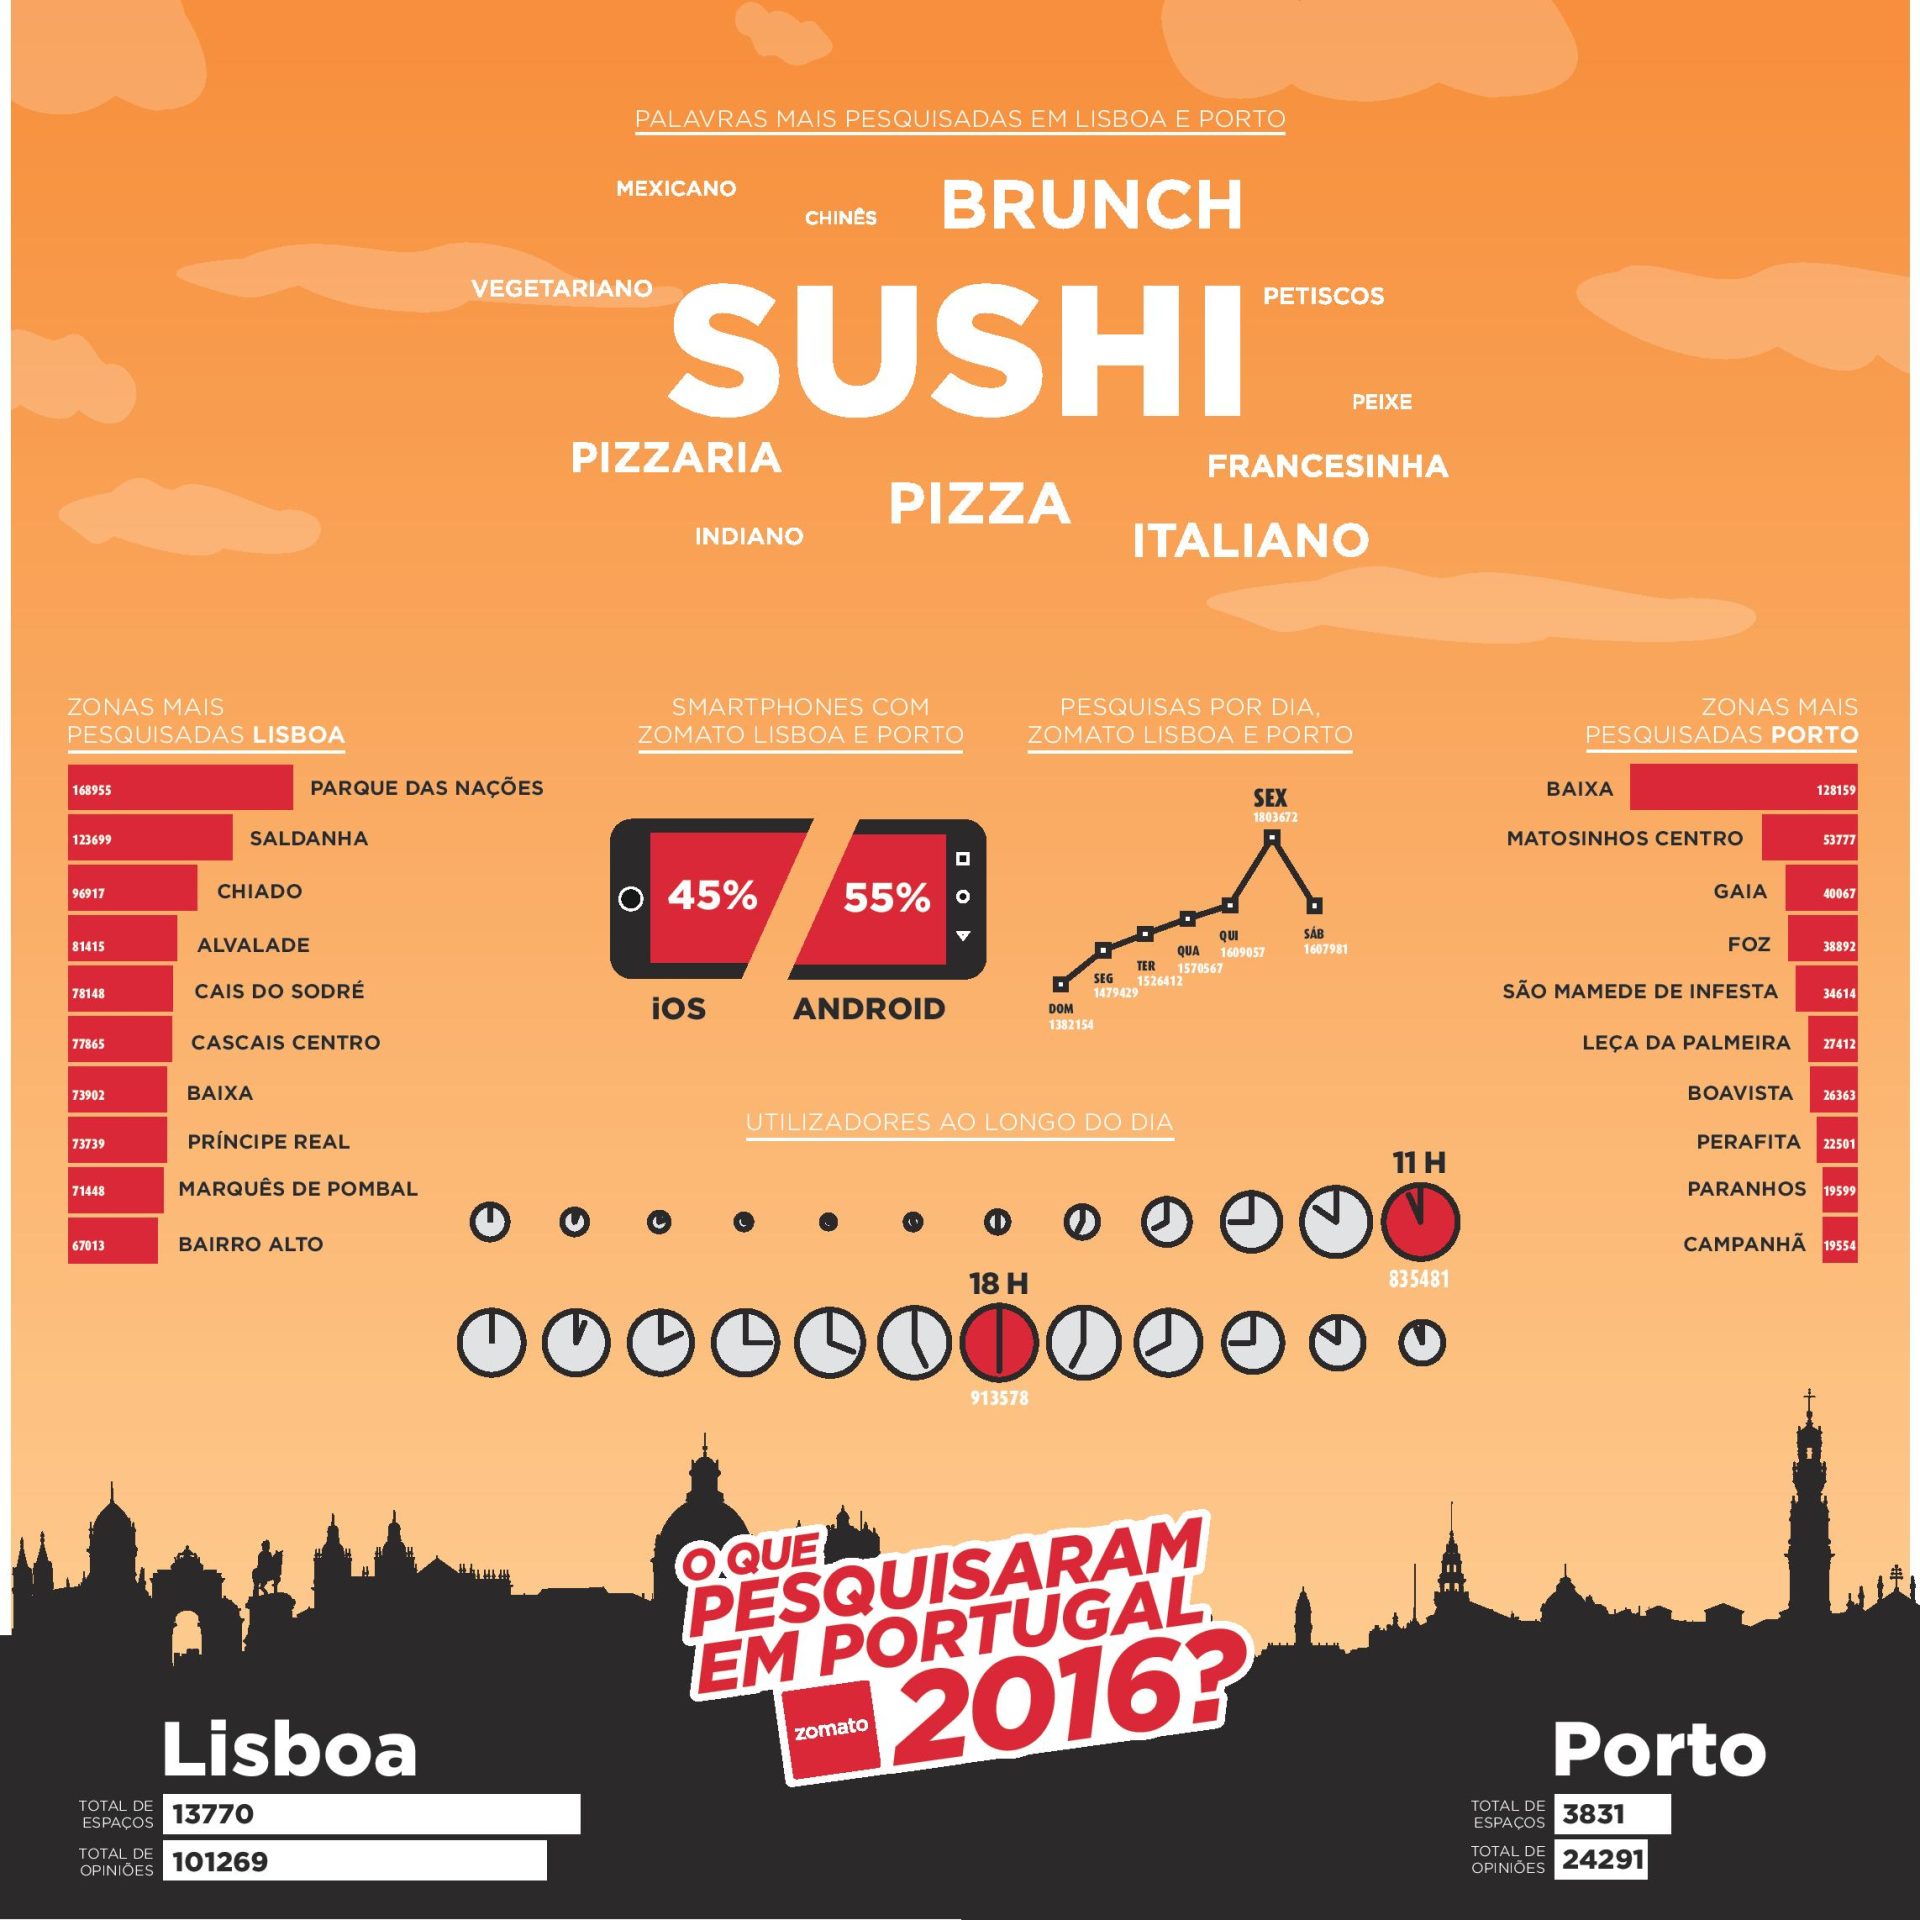 Comer fora: portugueses preferem sushi e brunch